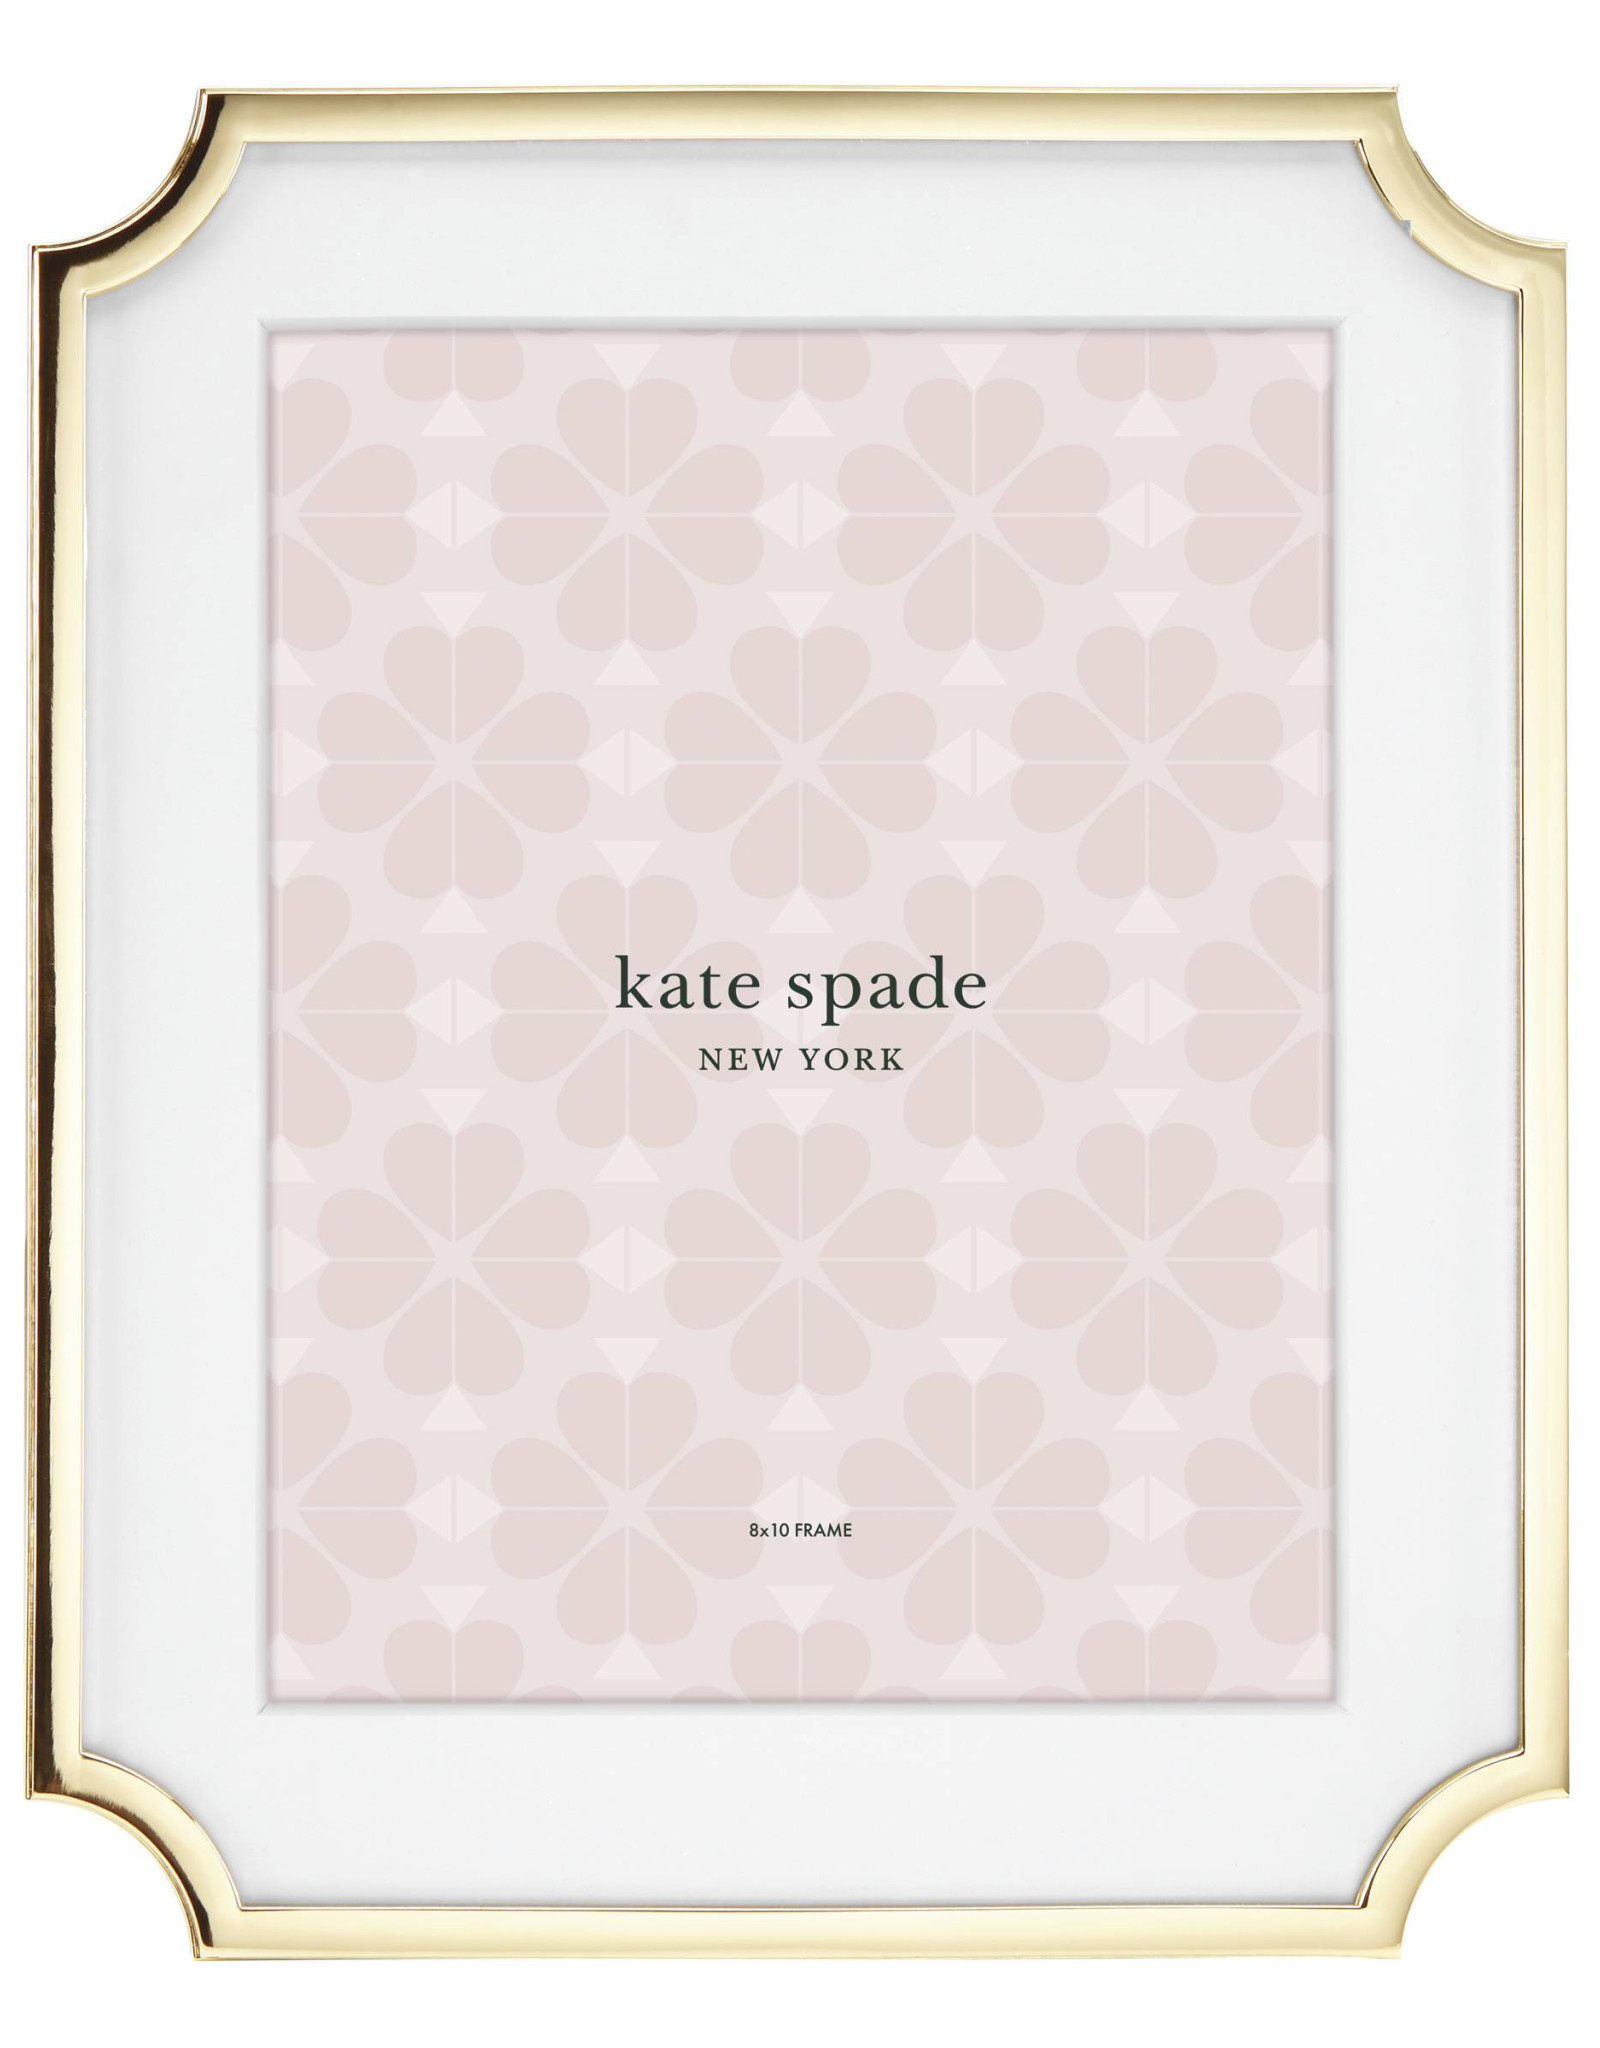 Kate Spade Sullivan gold frame 8x10